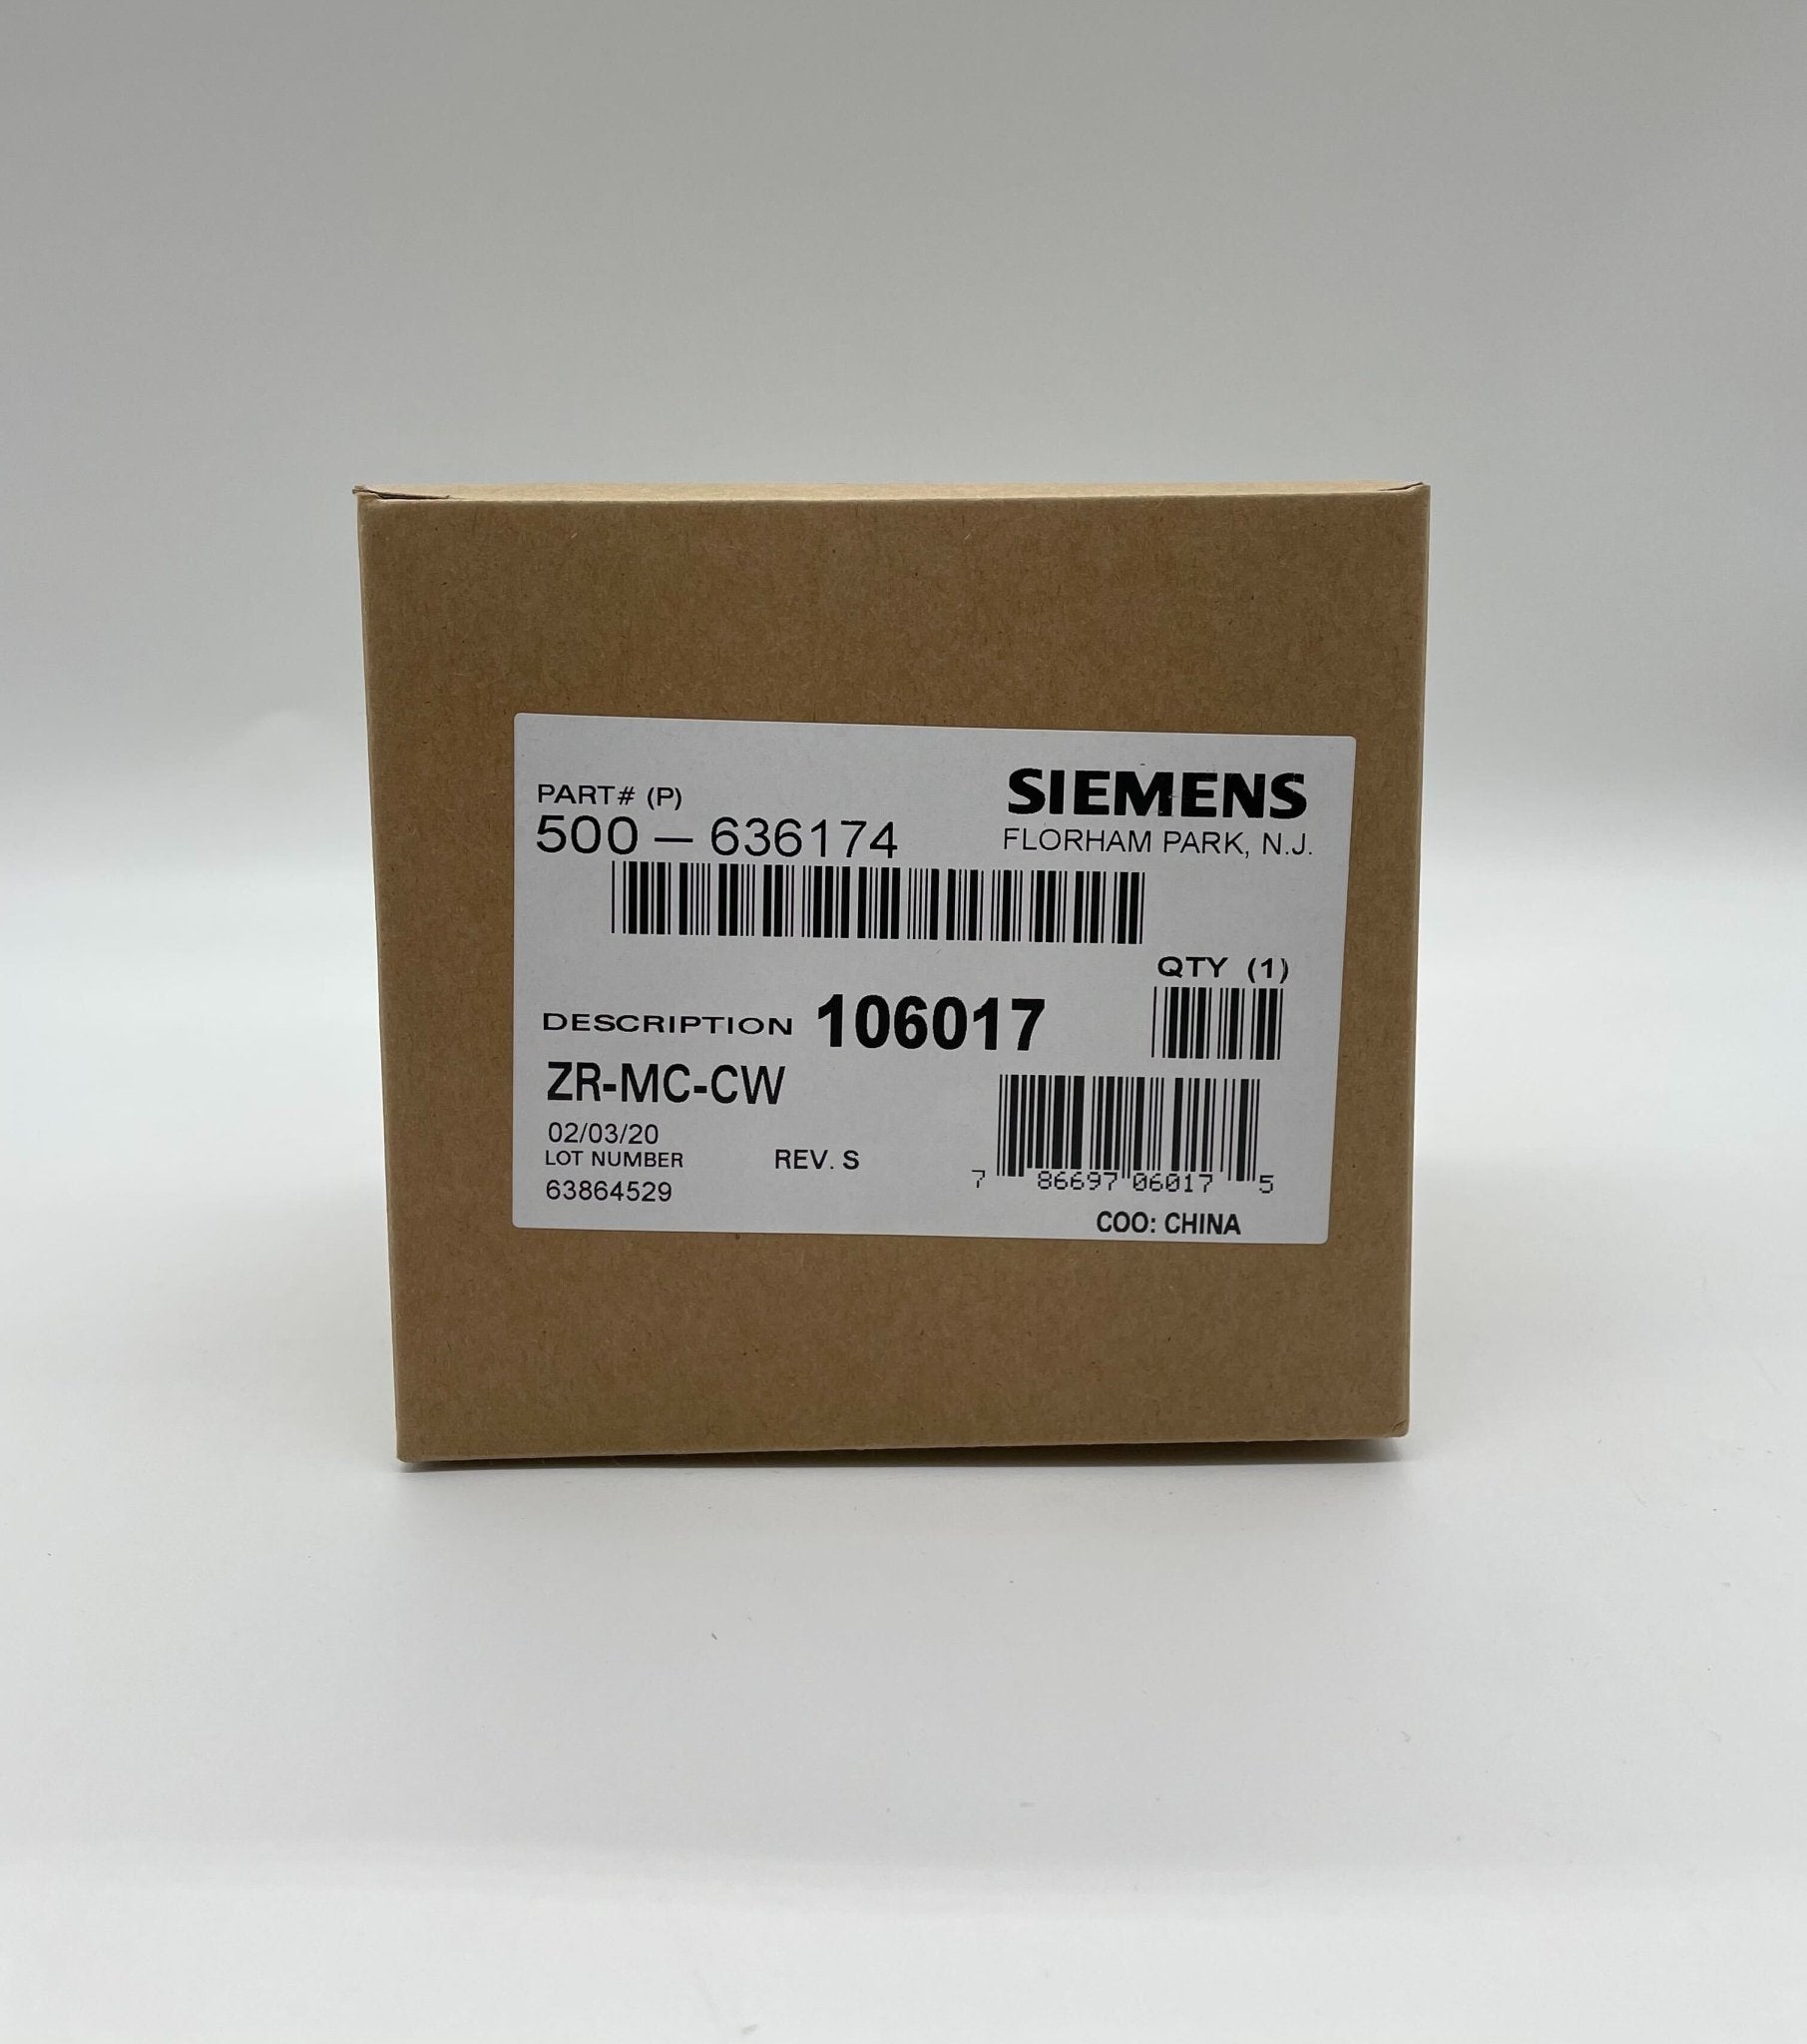 Siemens ZR-MC-CW - The Fire Alarm Supplier